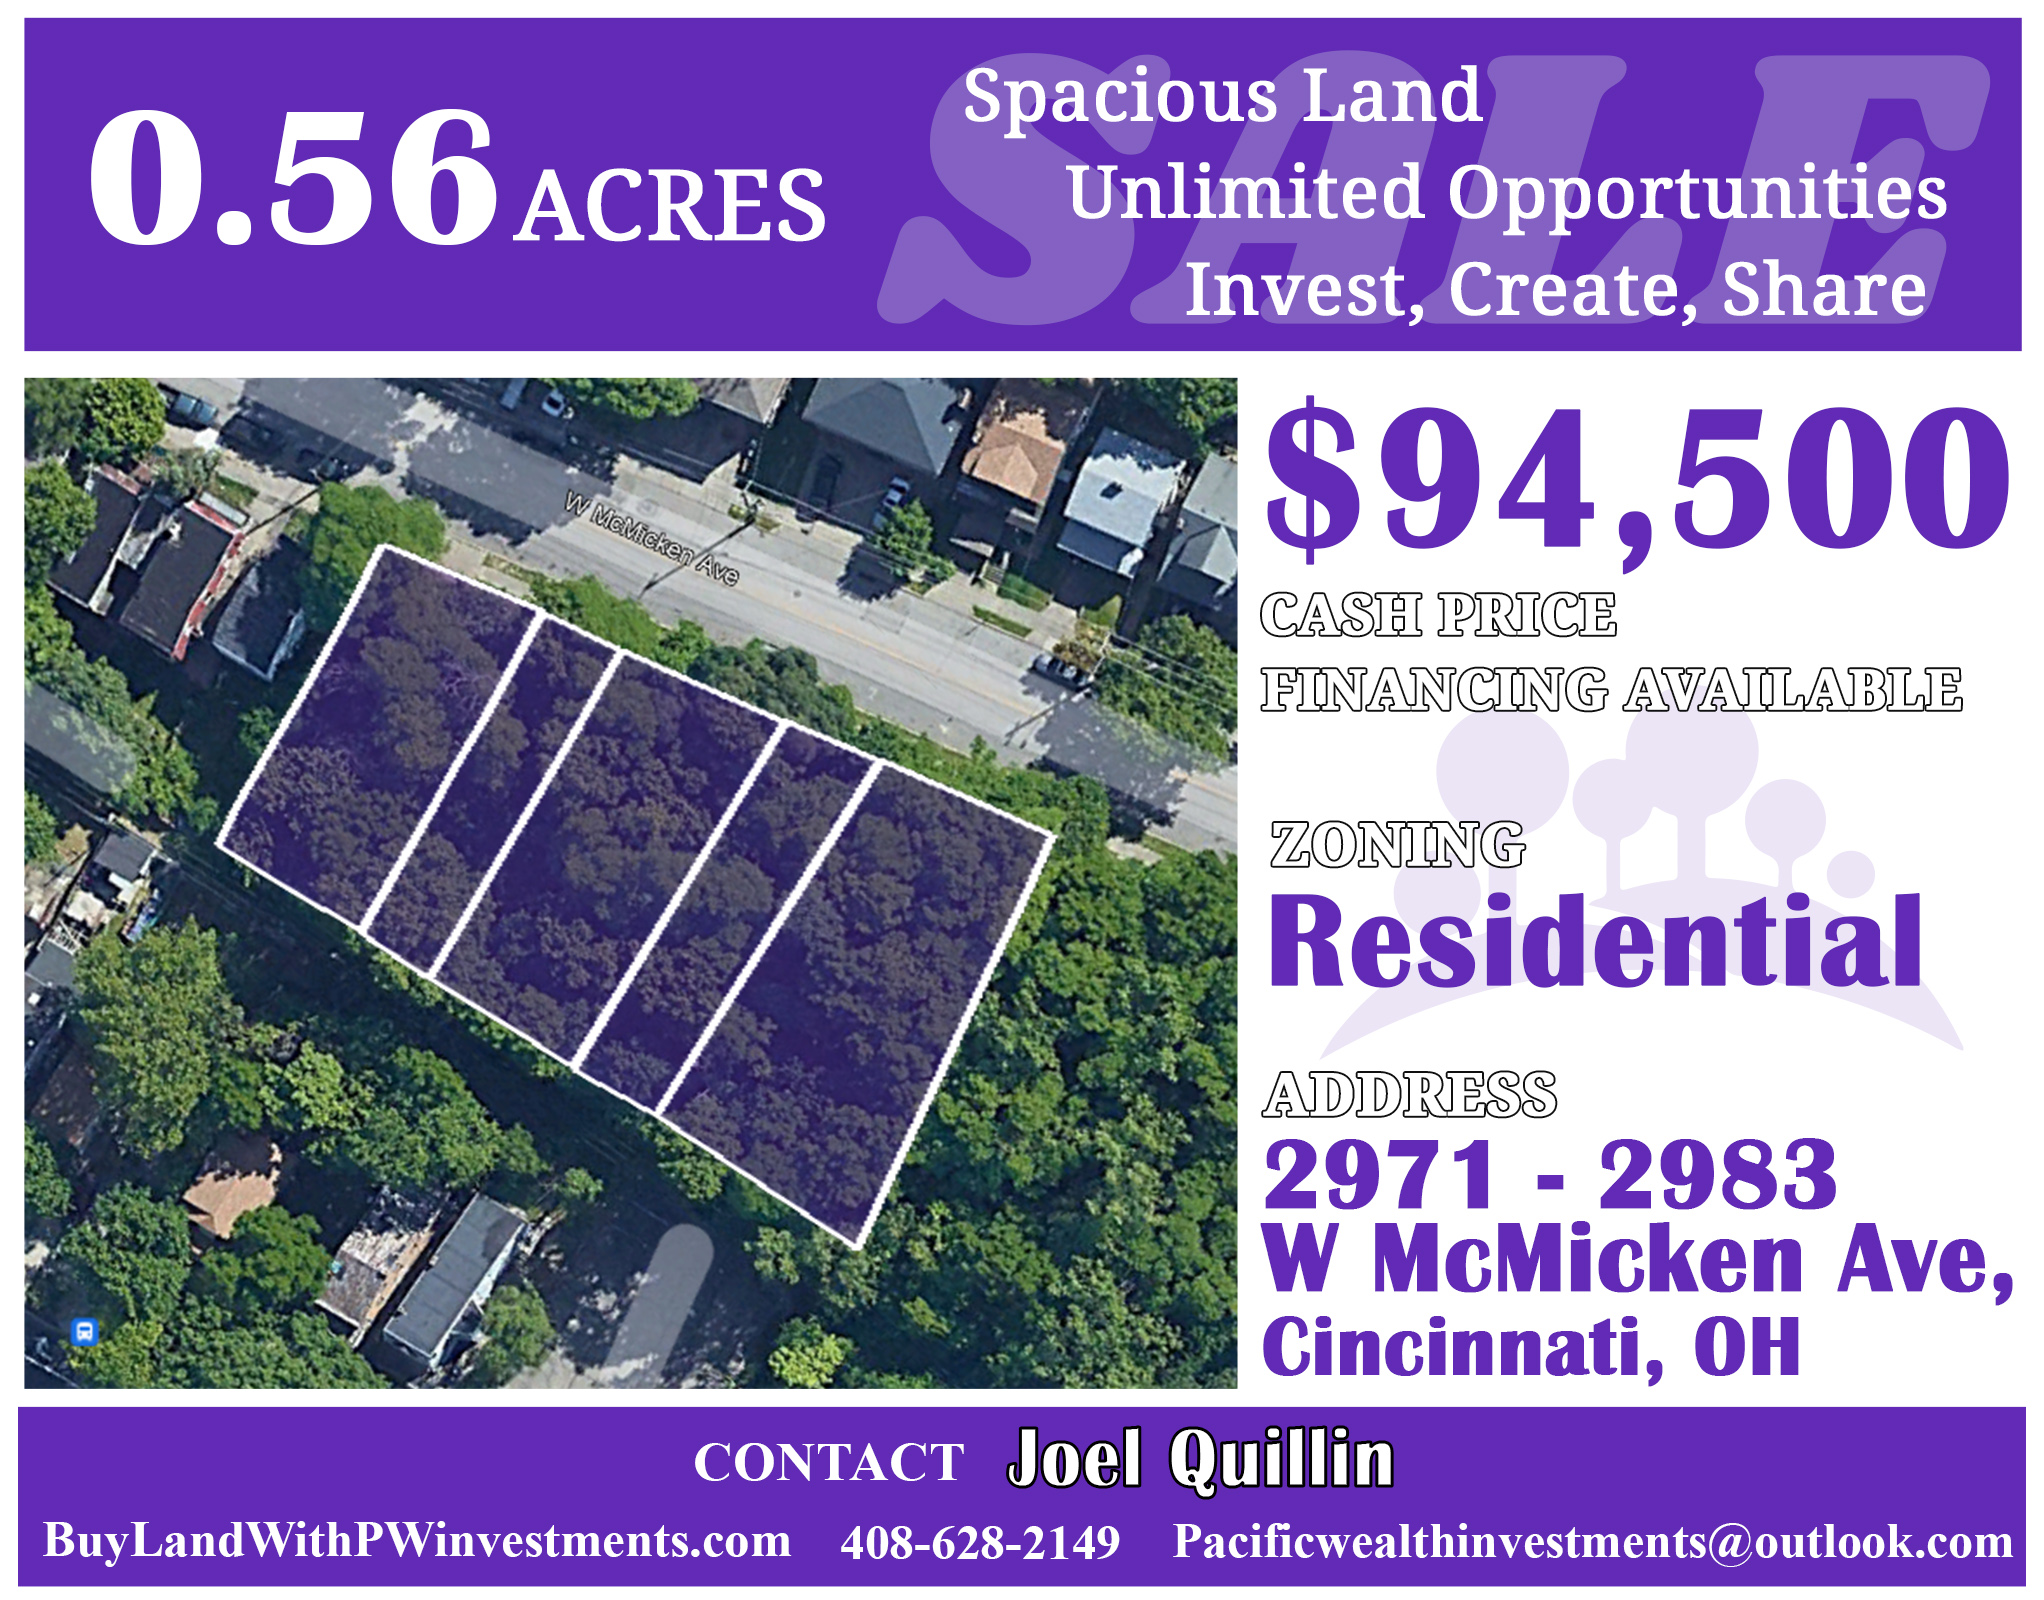 0.56ac Multi Family Property Sale near UC!